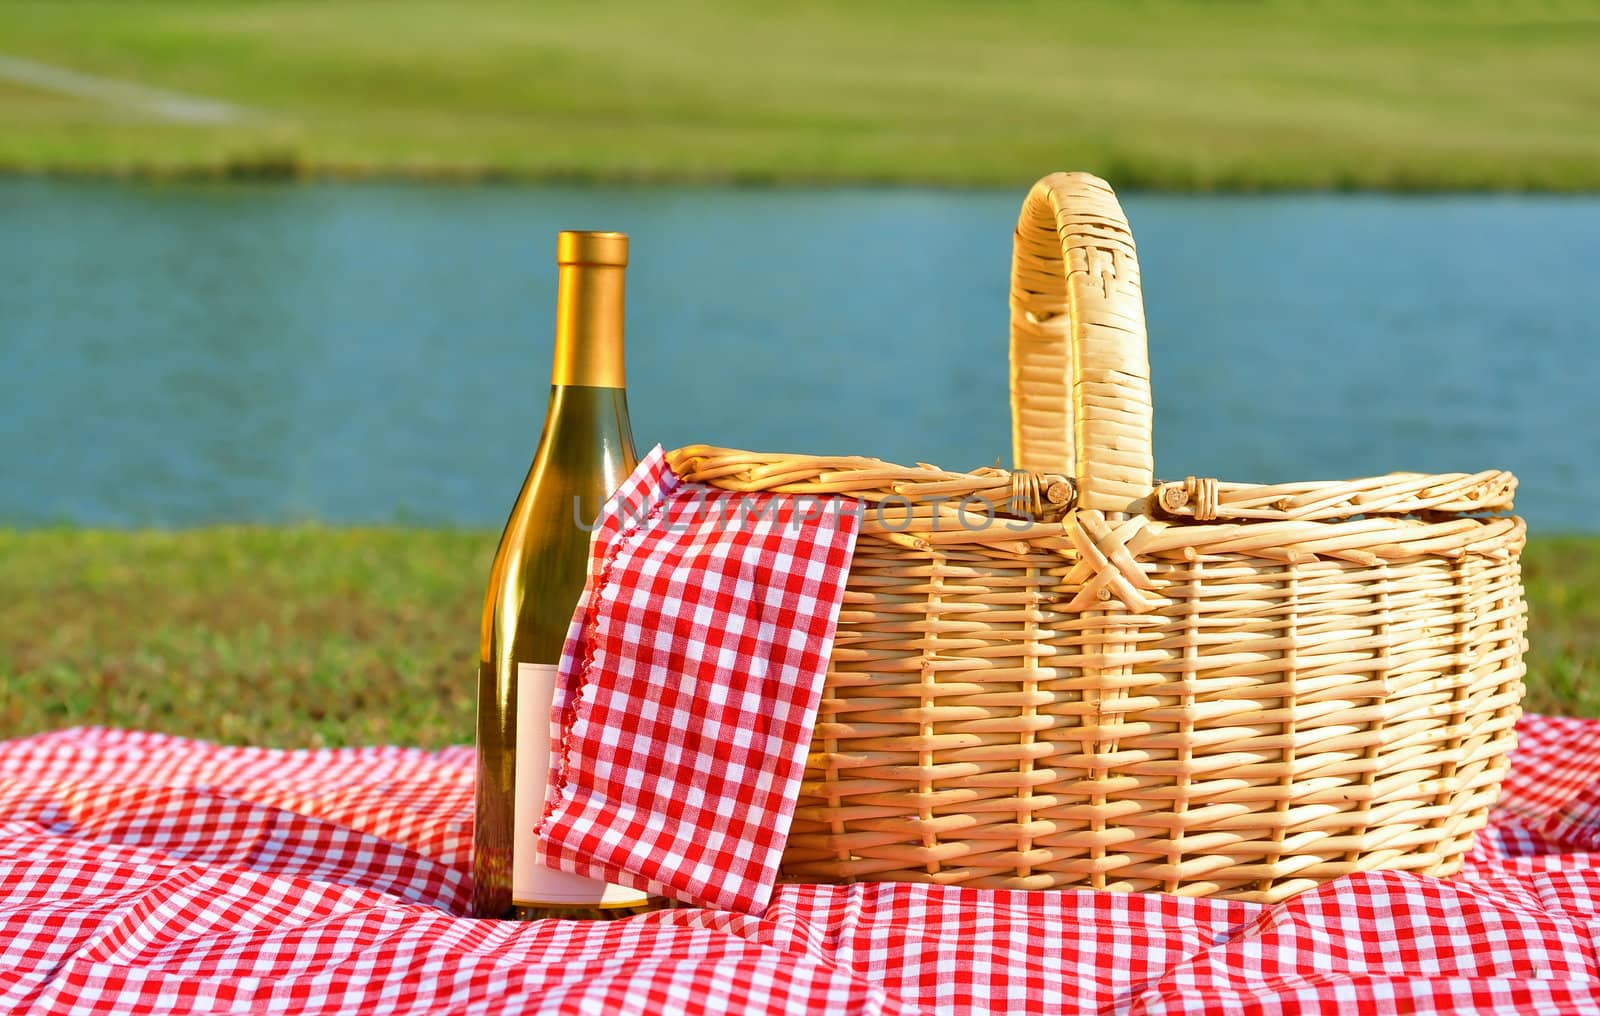 Picnic basket and bottle of white wine on red gingham blanket beside lake.